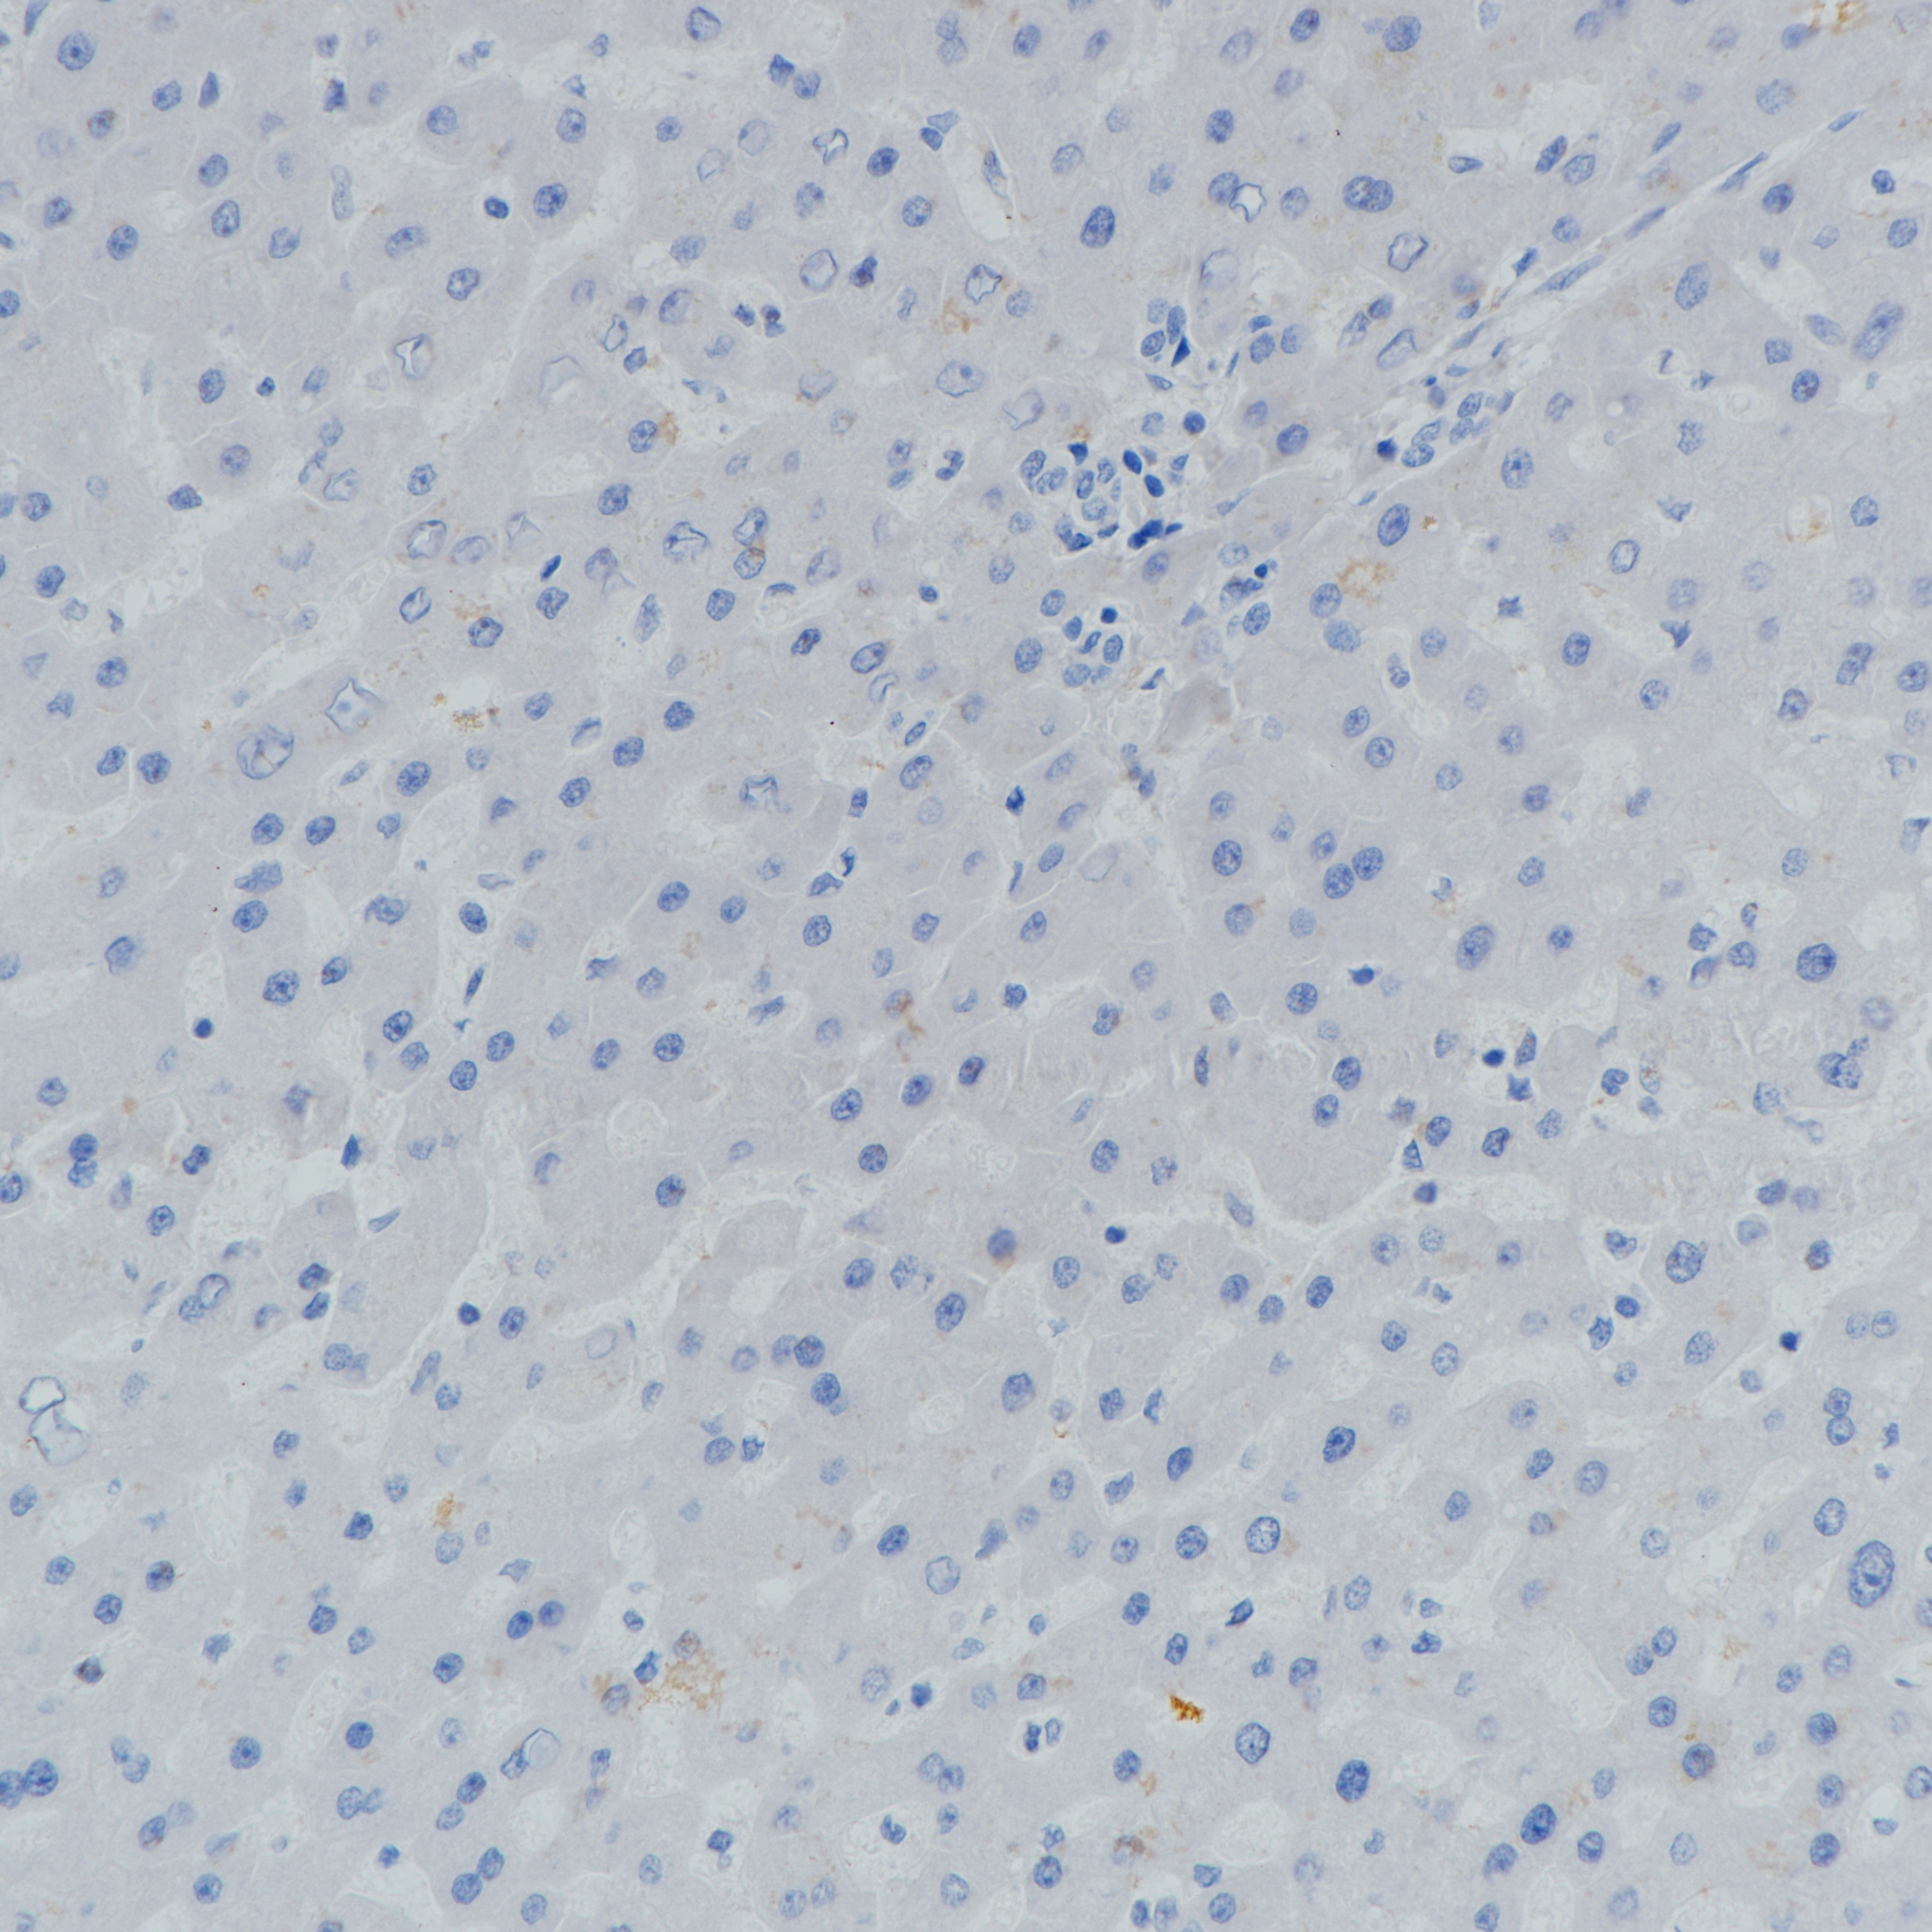 pan-TRK(EPR17341)肝 阴性组织染色